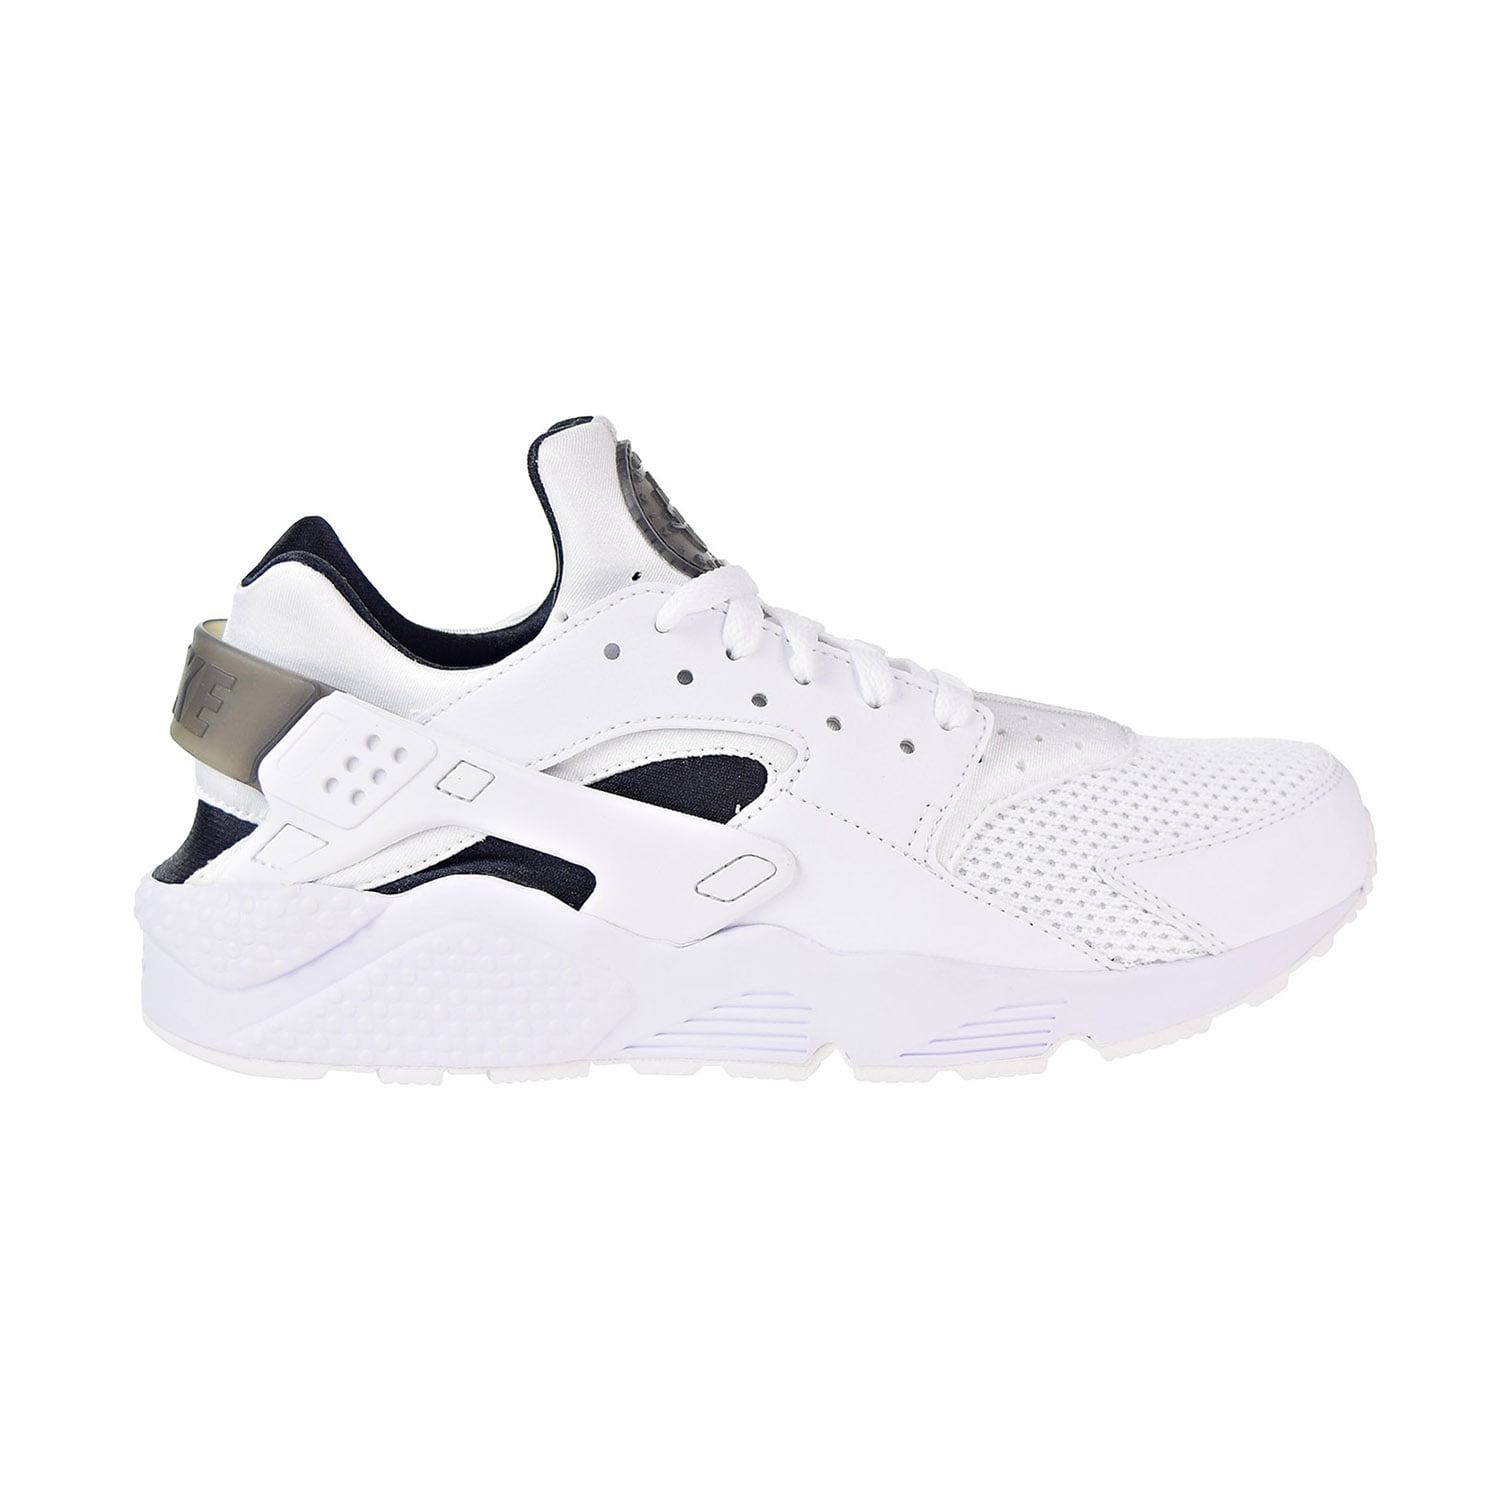 Air Huarache Men's Running Shoes White/Black/Pure Platinum 318429-110 - Walmart.com